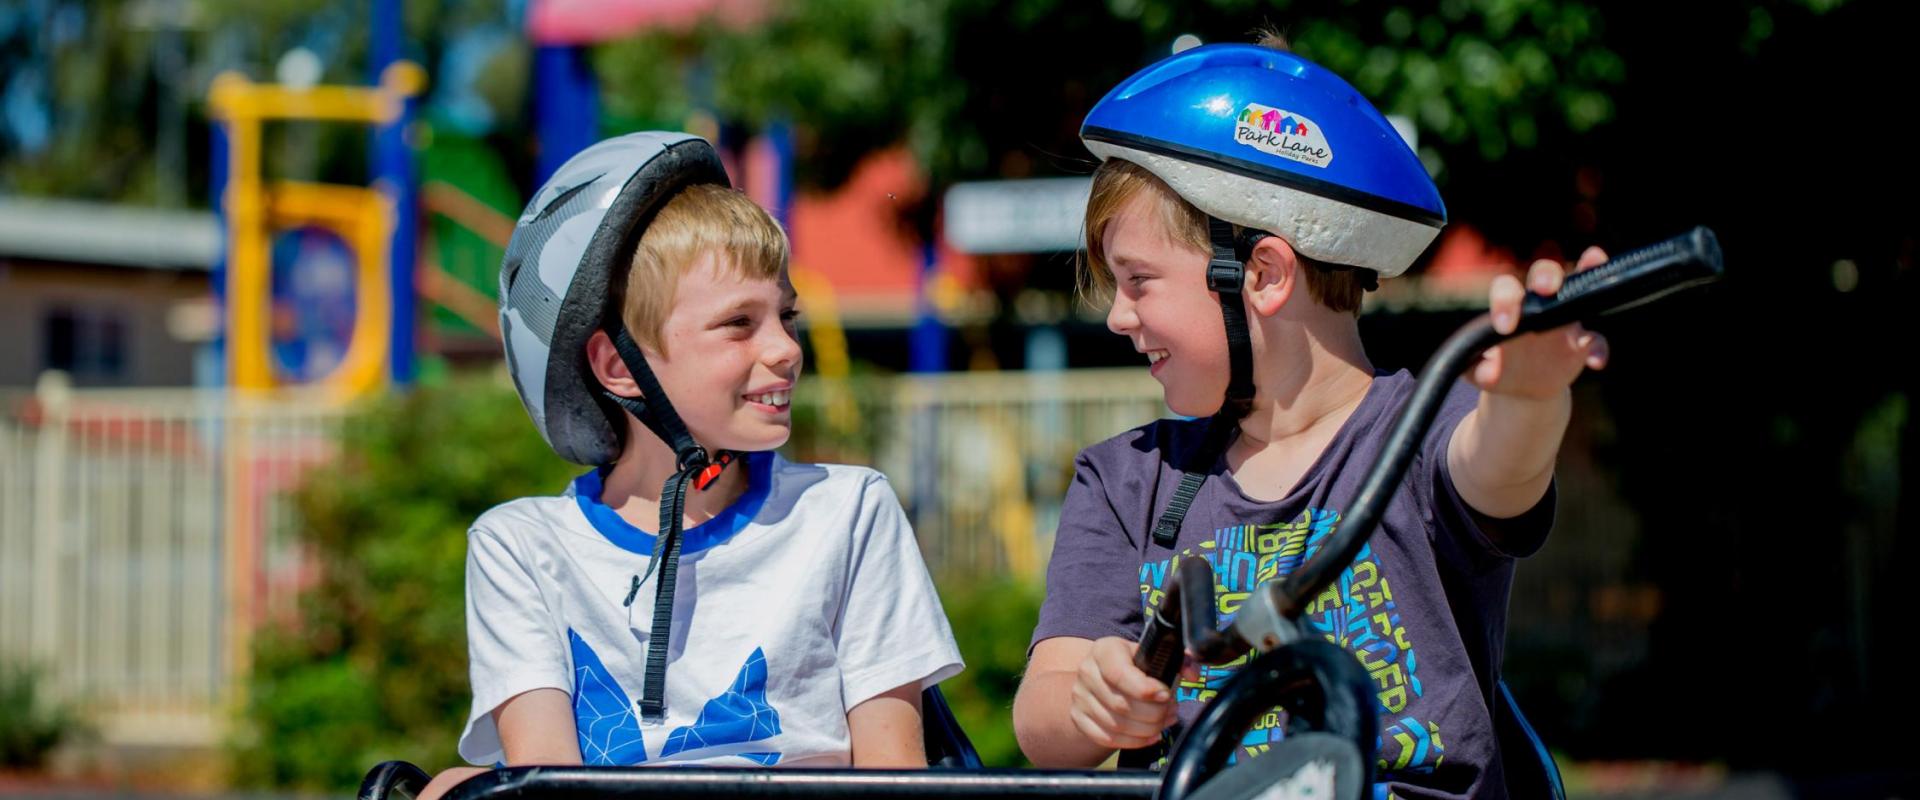 BIG4 Shepparton Park Lane Holiday Park - Boys on Pedal Go Karts